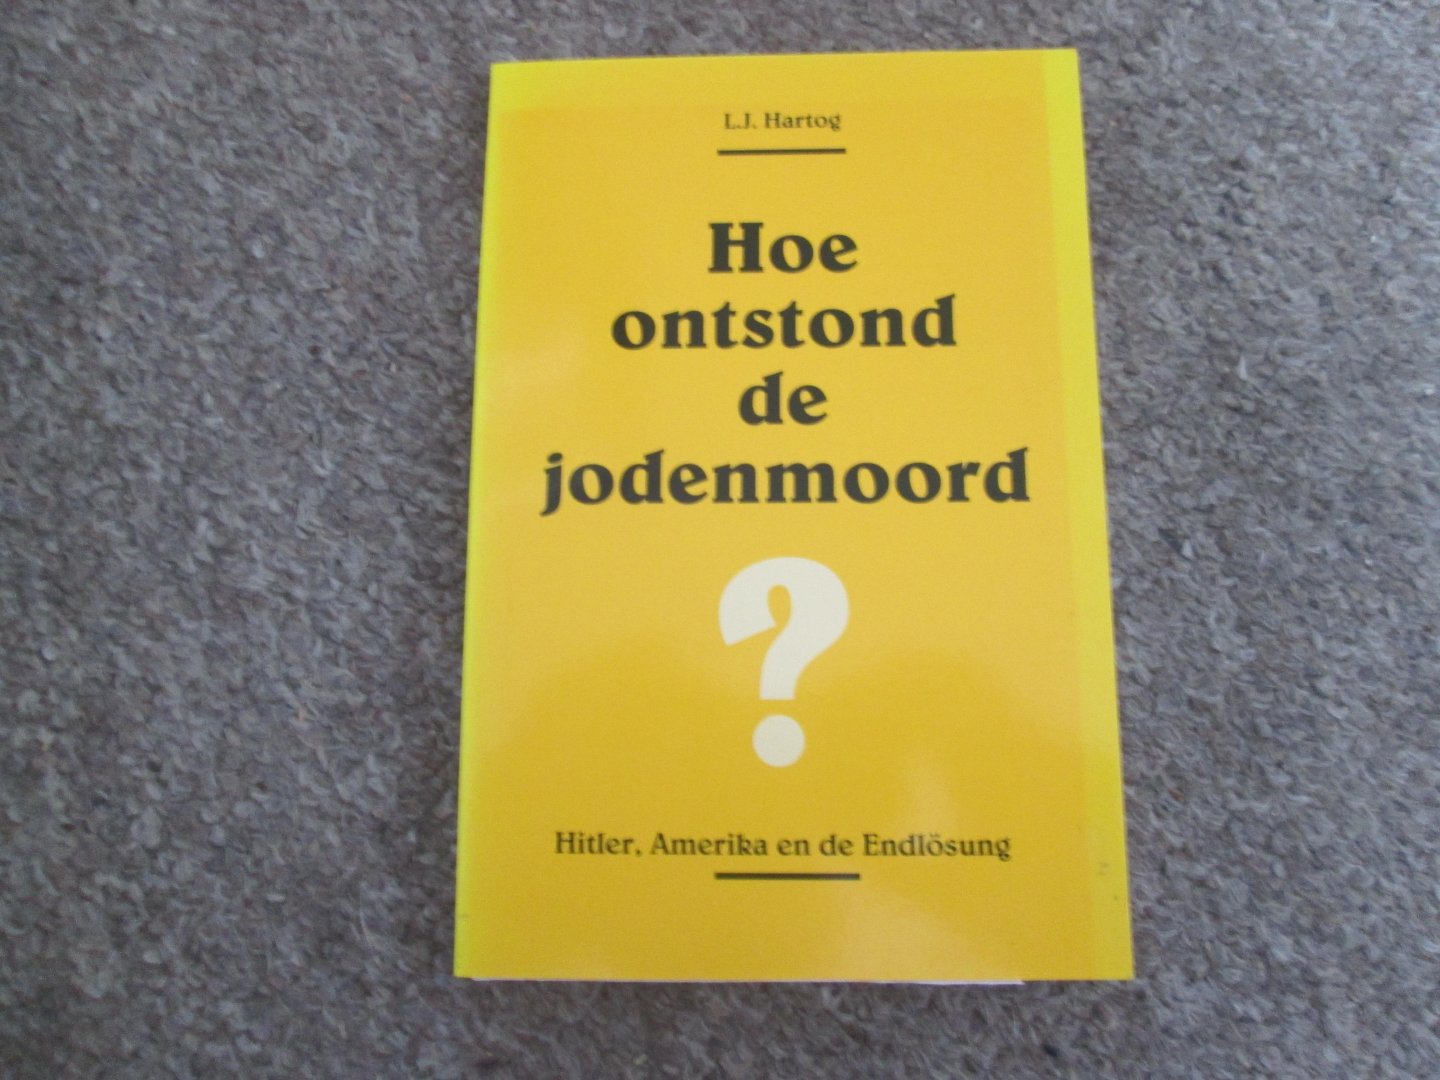 Hartog ,L.J. - HOE ONTSTOND DE JODENMOORD ? ; Hitler , Amerika en de Endlosung